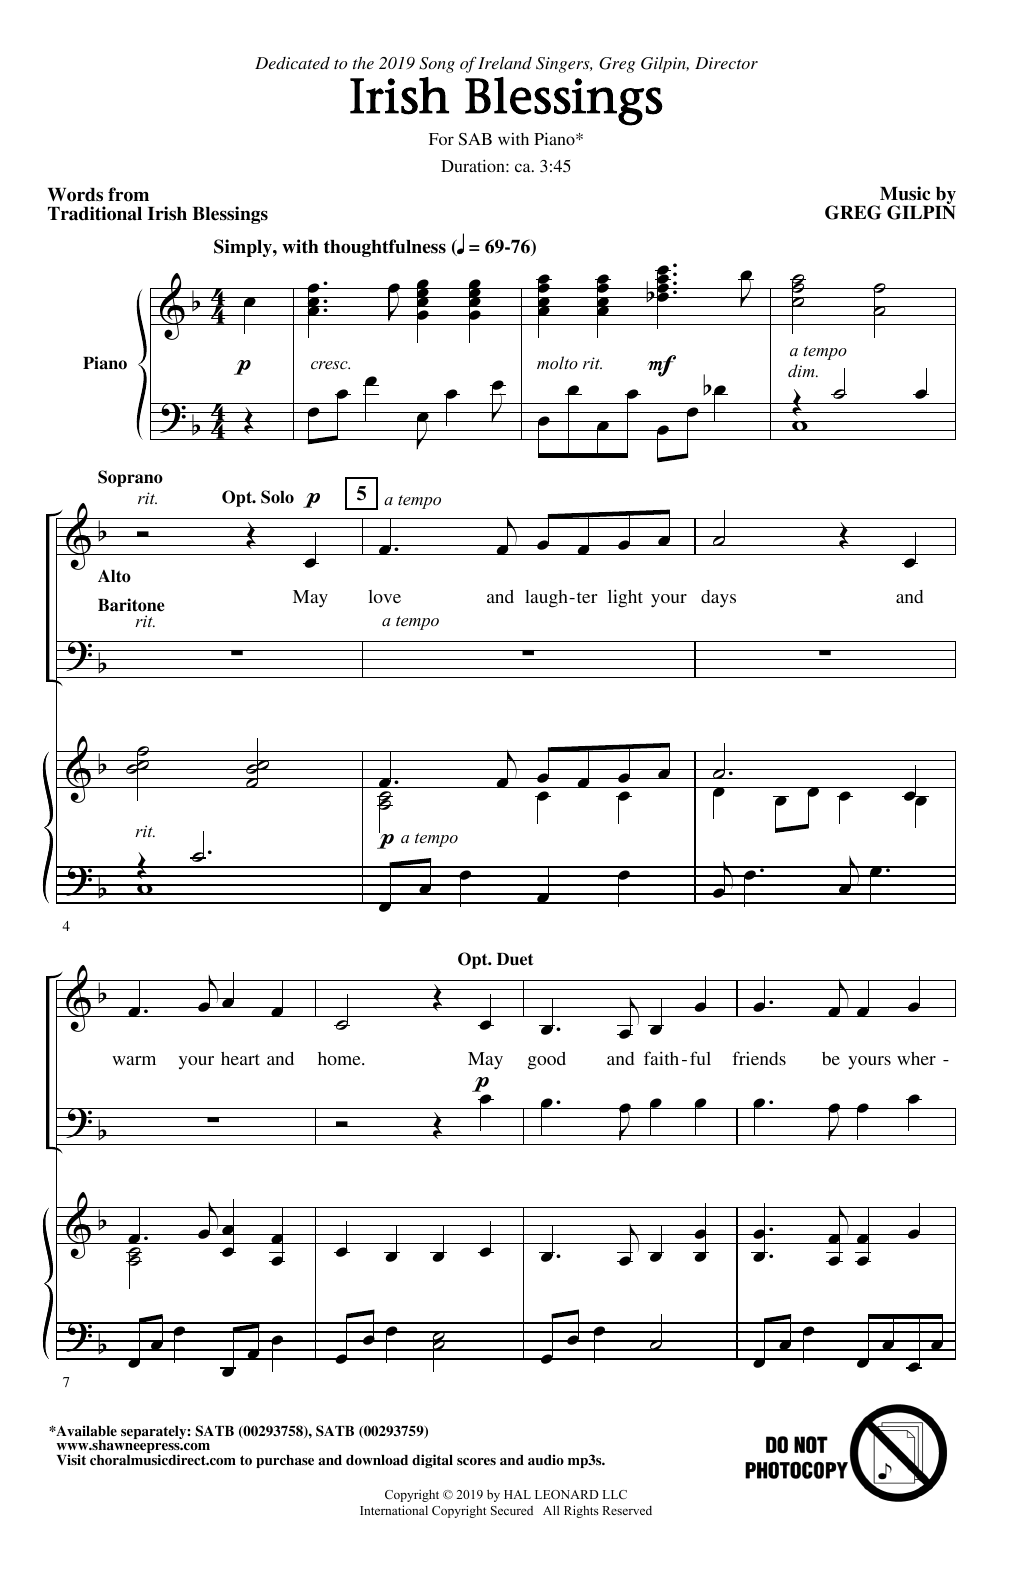 Greg Gilpin Irish Blessings Sheet Music Notes & Chords for SATB Choir - Download or Print PDF